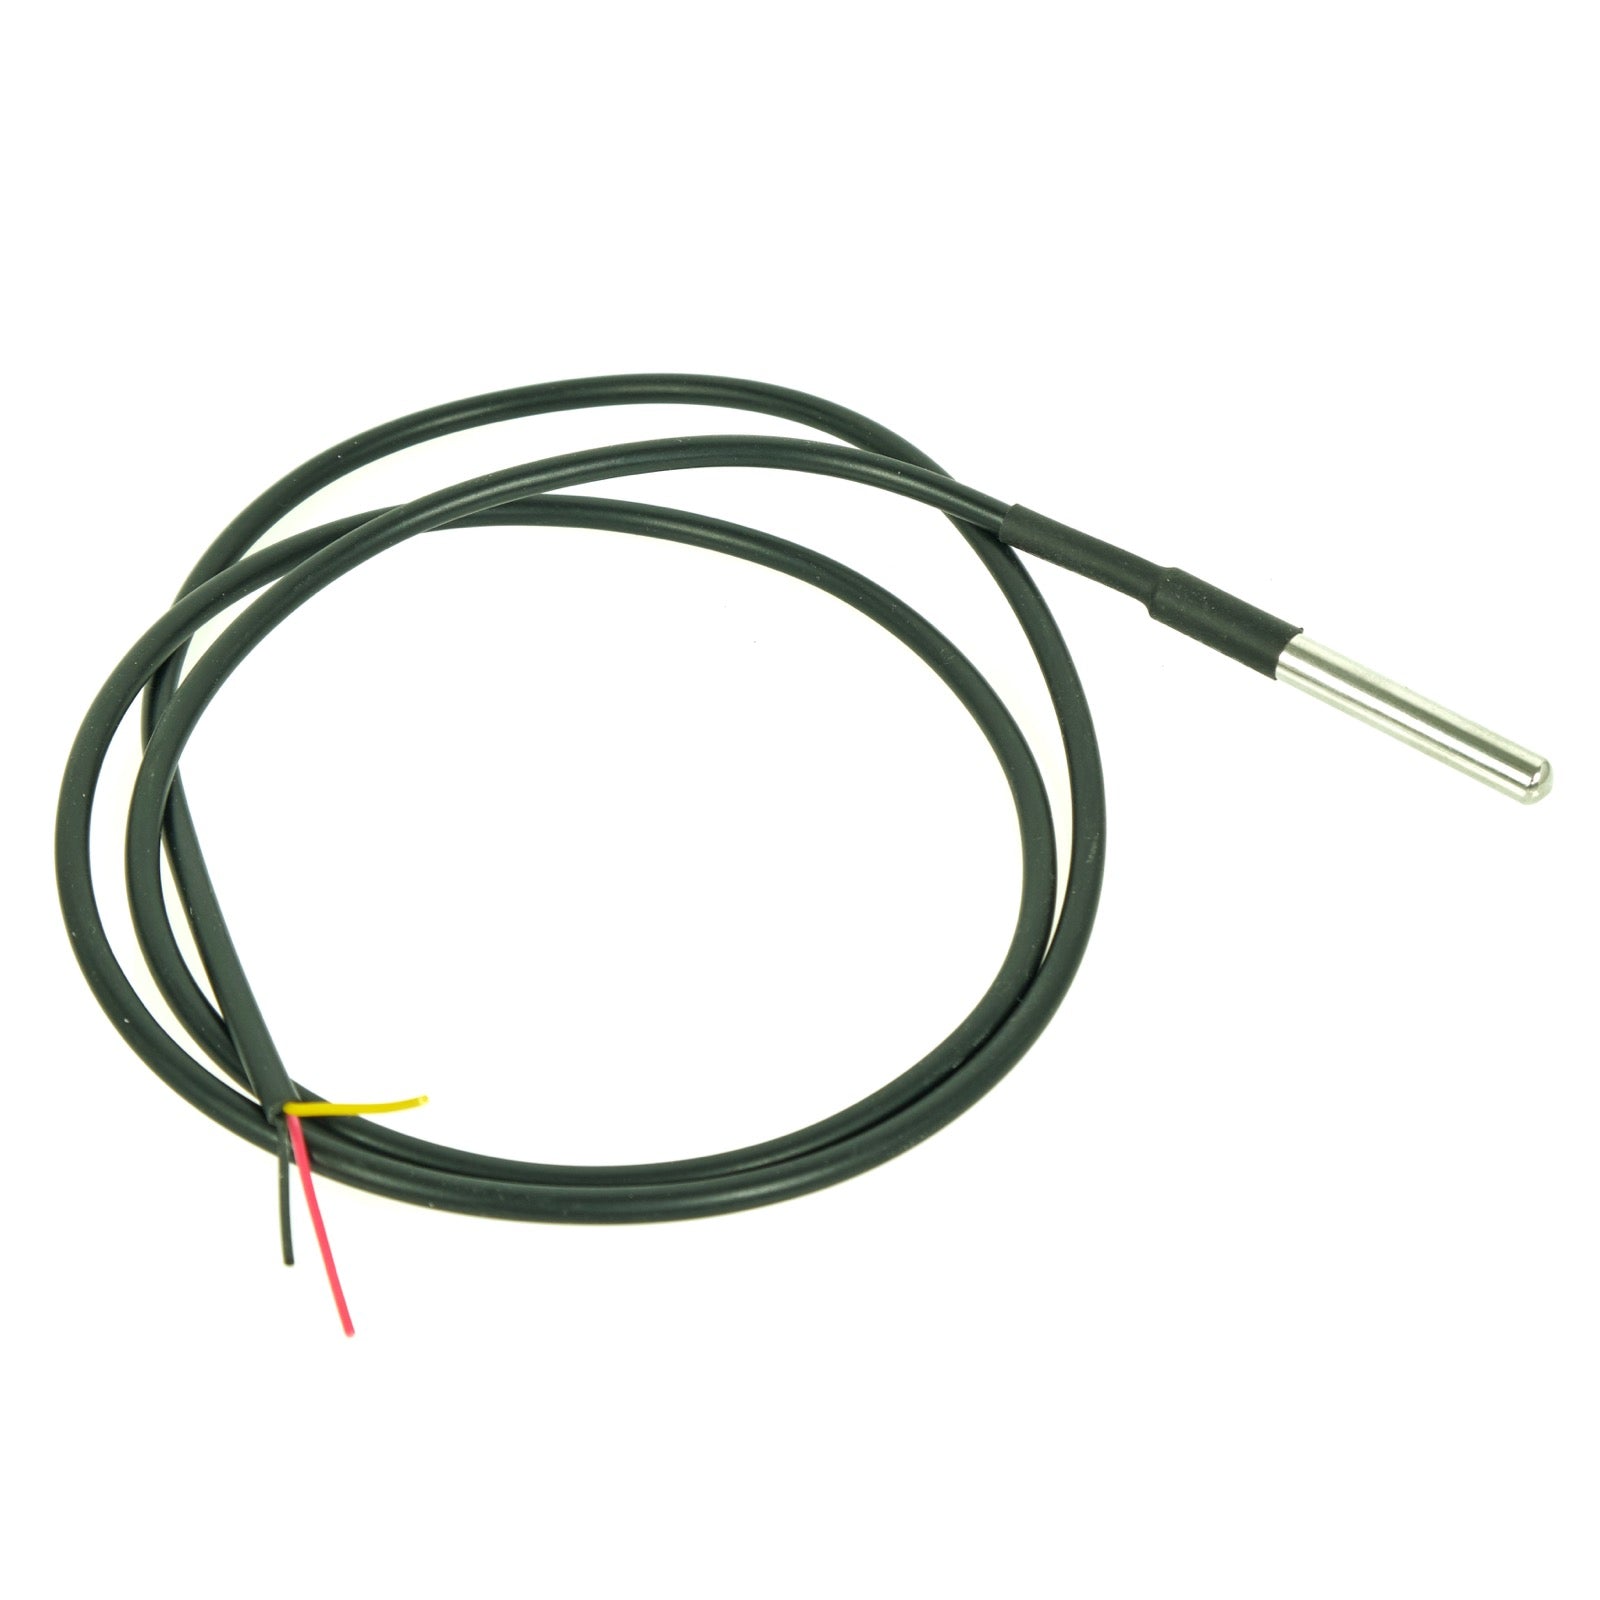 DS18B20 Temperatur Sensor Kabel Wasserdicht